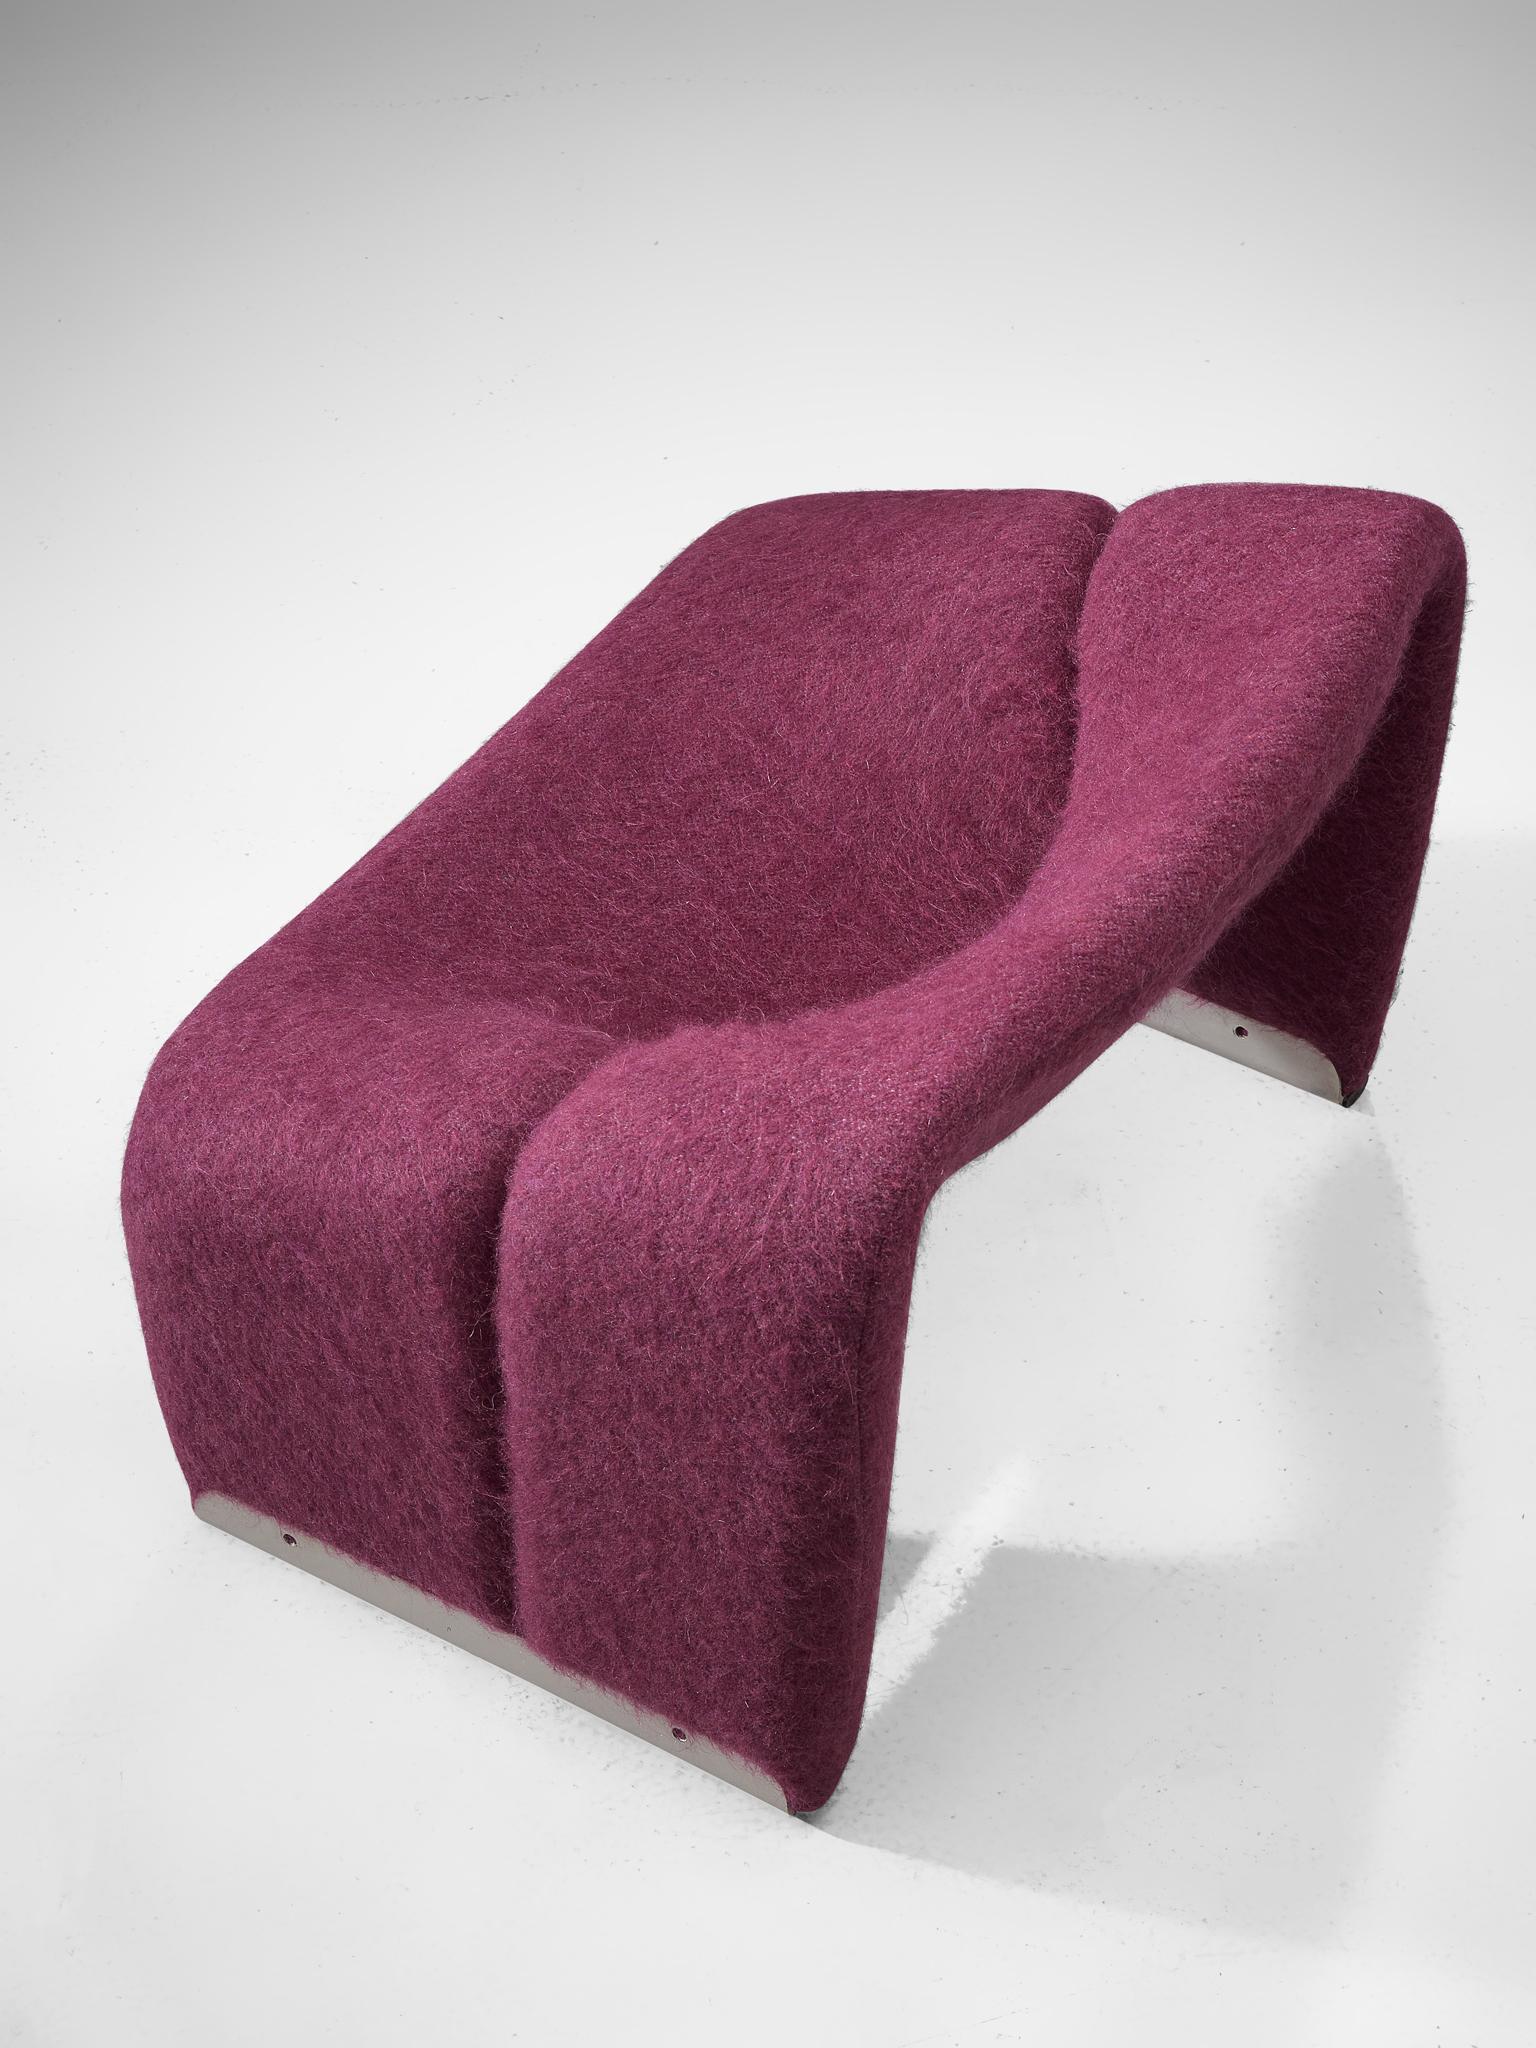 Aluminum Pierre Paulin 'Groovy' Lounge Chair Customizable in Pierre Frey Wool Upholstery